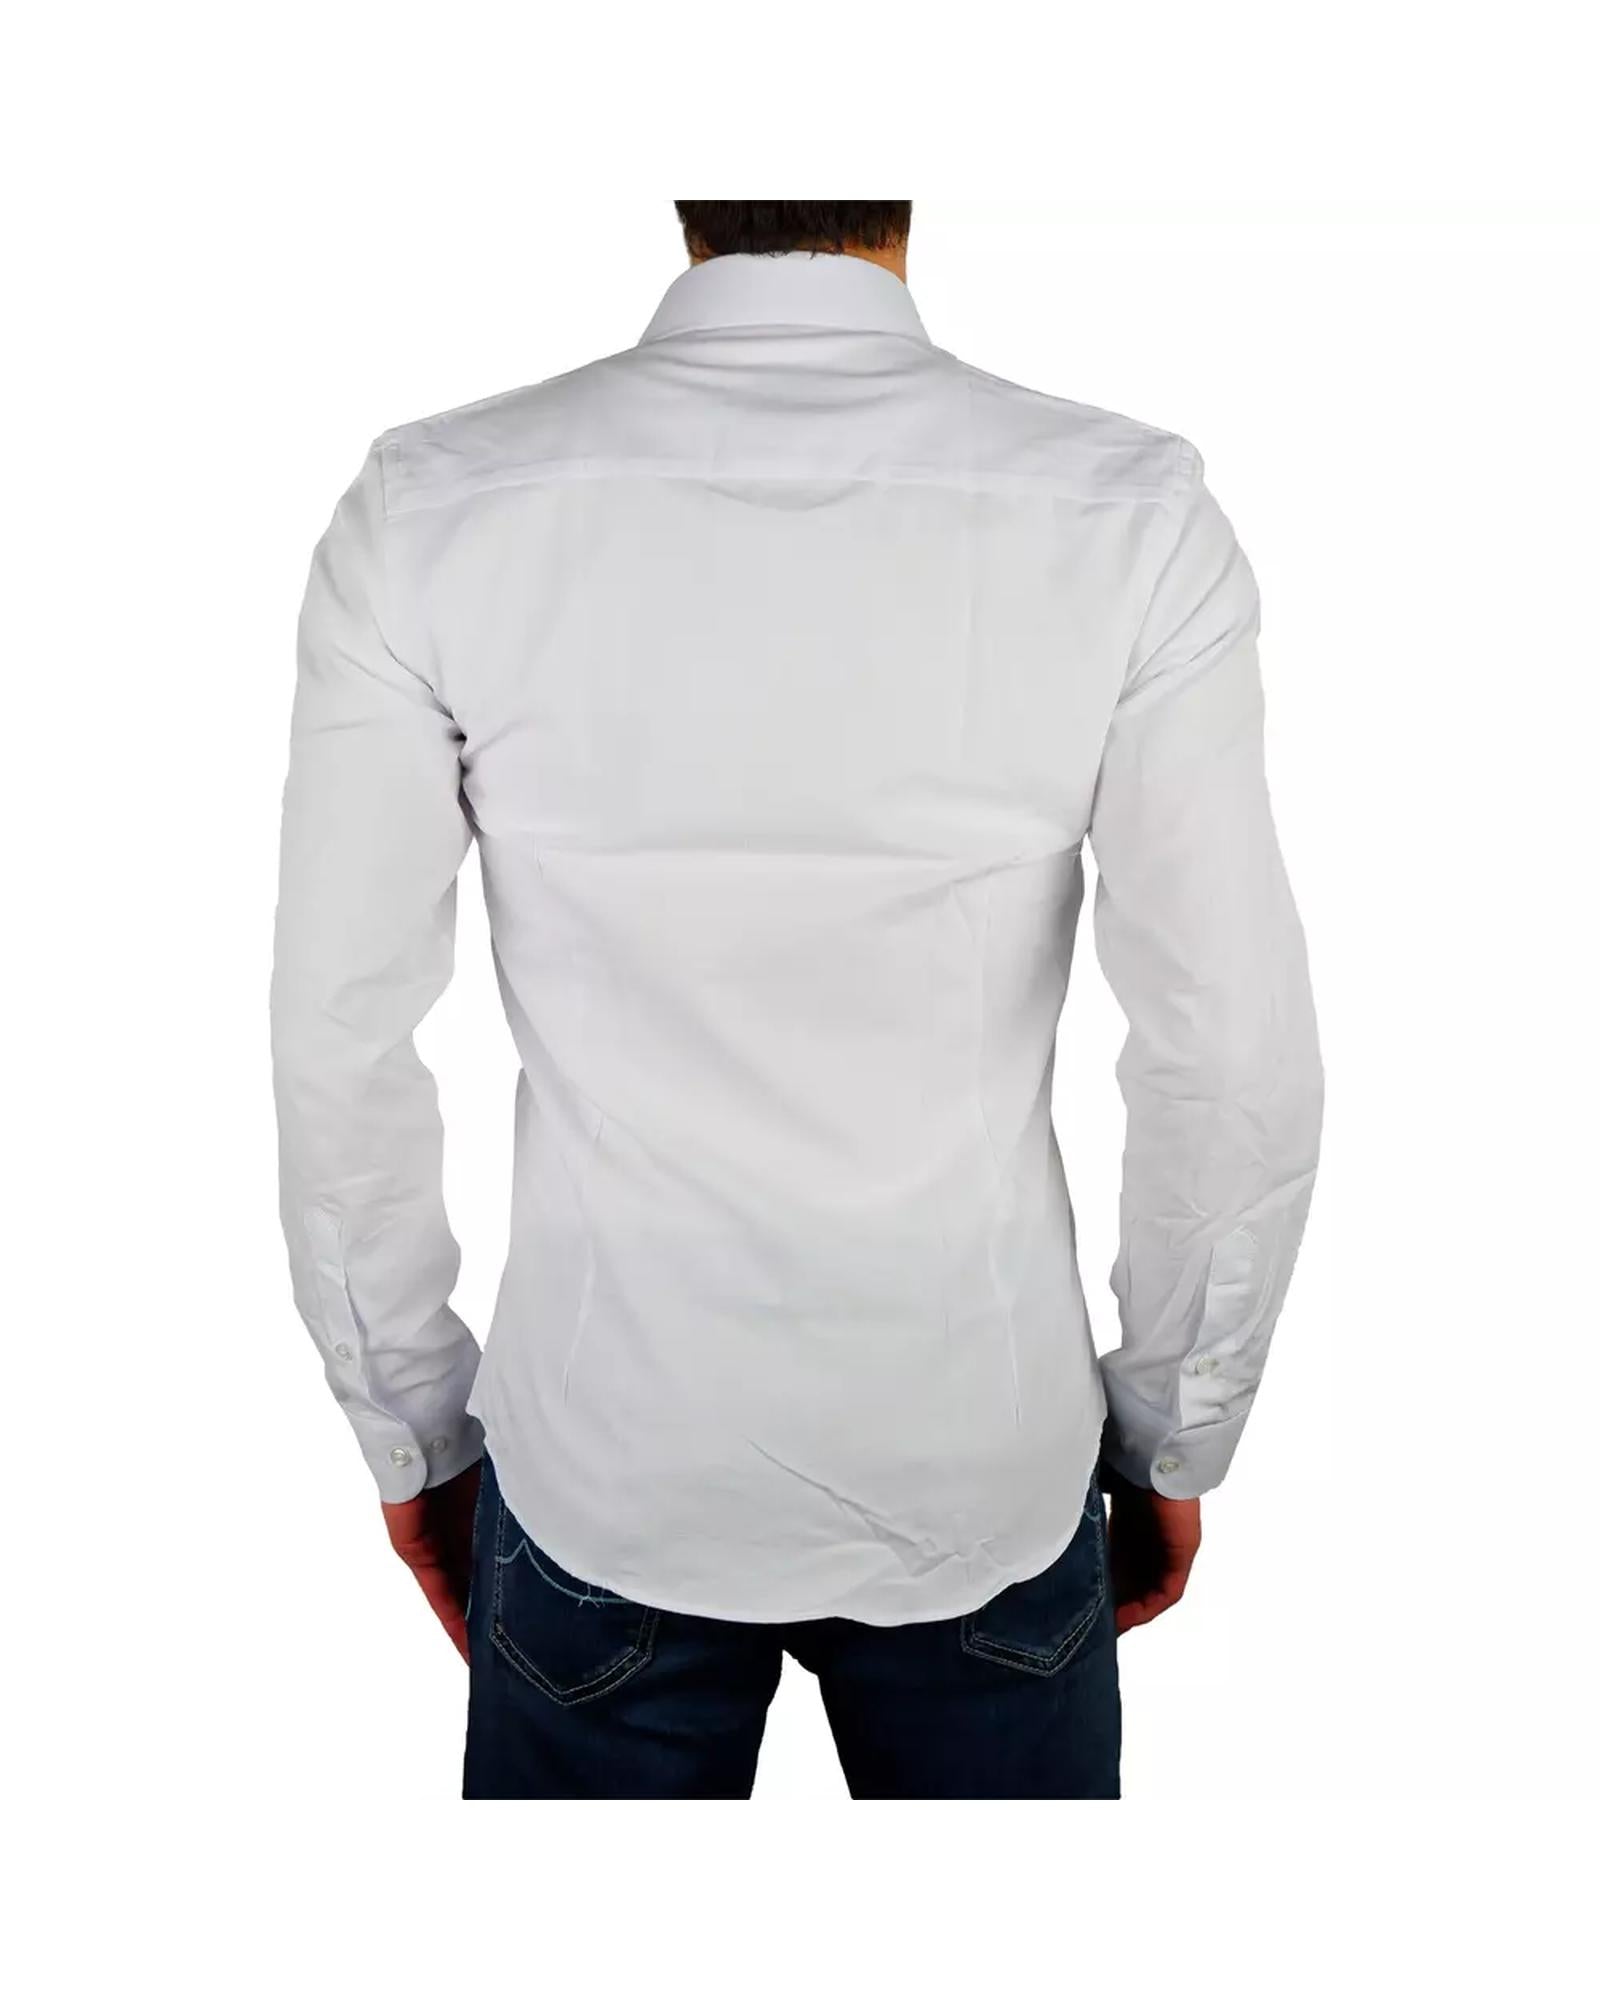 Milano Shirt in Oxford White Cotton 45 IT Men